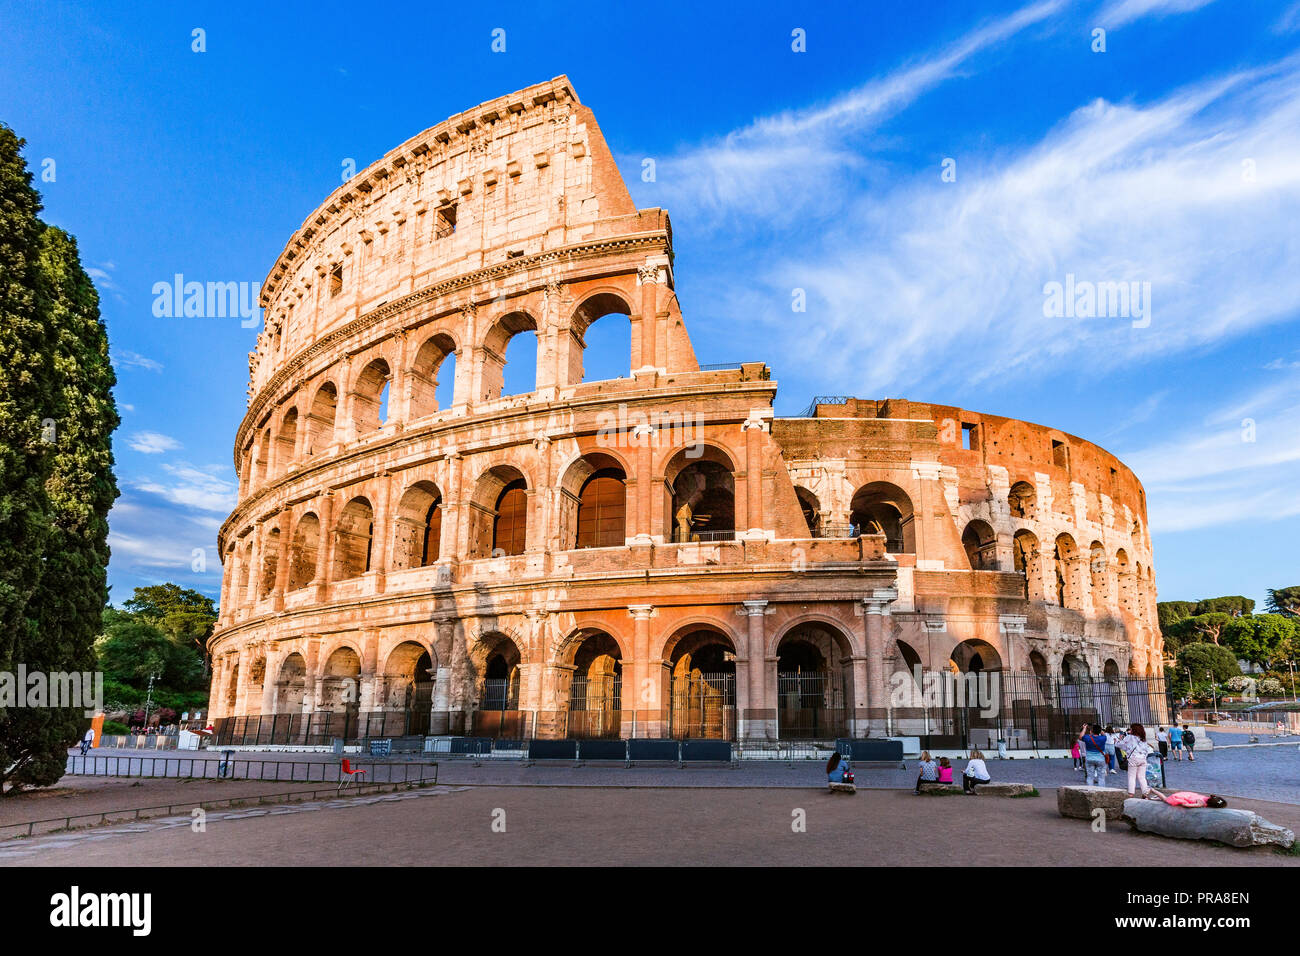 Roma, Italia. El Coliseo o el Coliseo al atardecer. Foto de stock